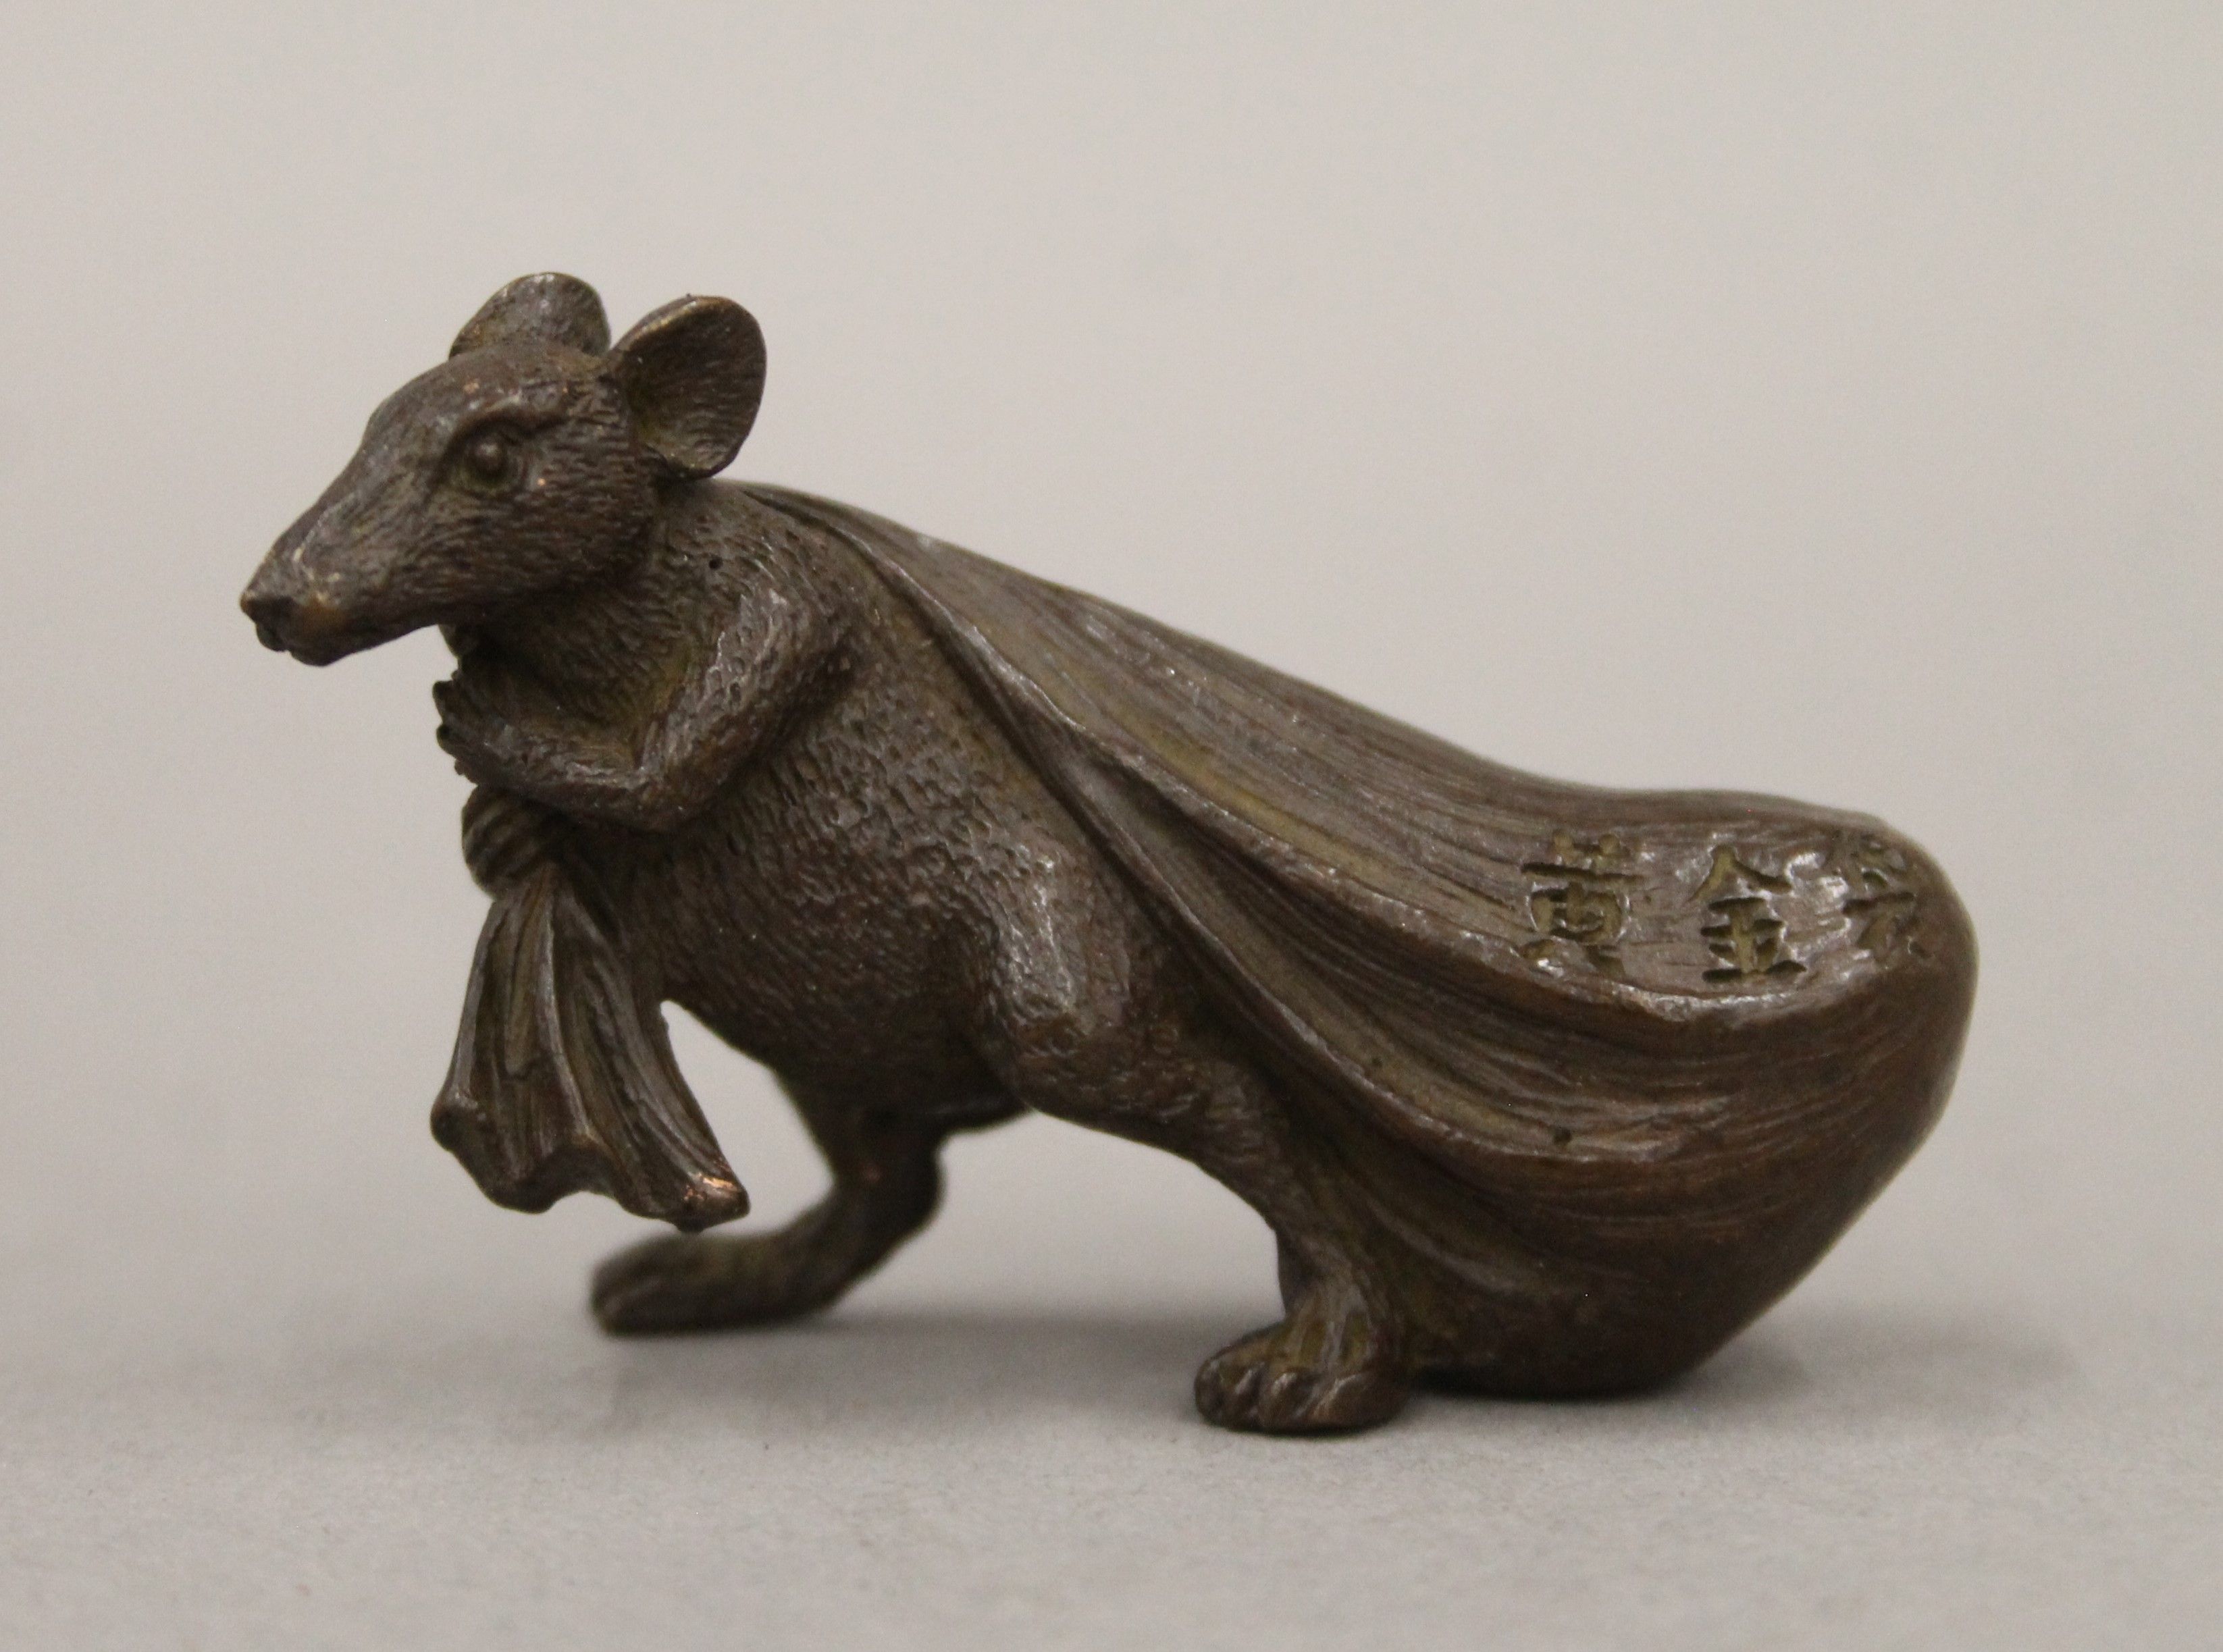 A bronze model of a rat carrying a bag. 3.5 cm high.